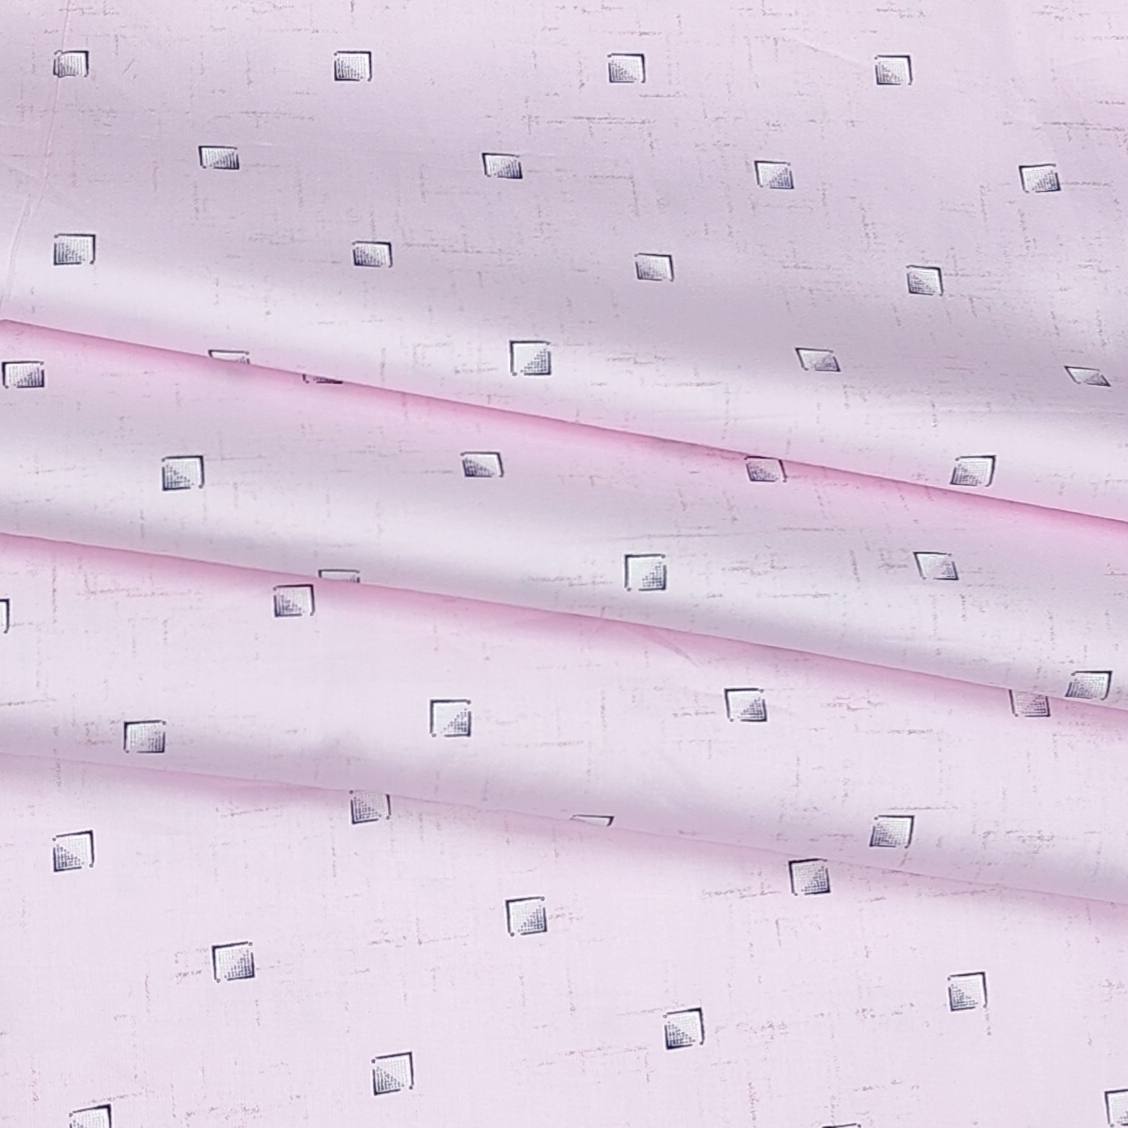 Mantire 100% cotton Premium Printed shirt Fabric Colour Pink